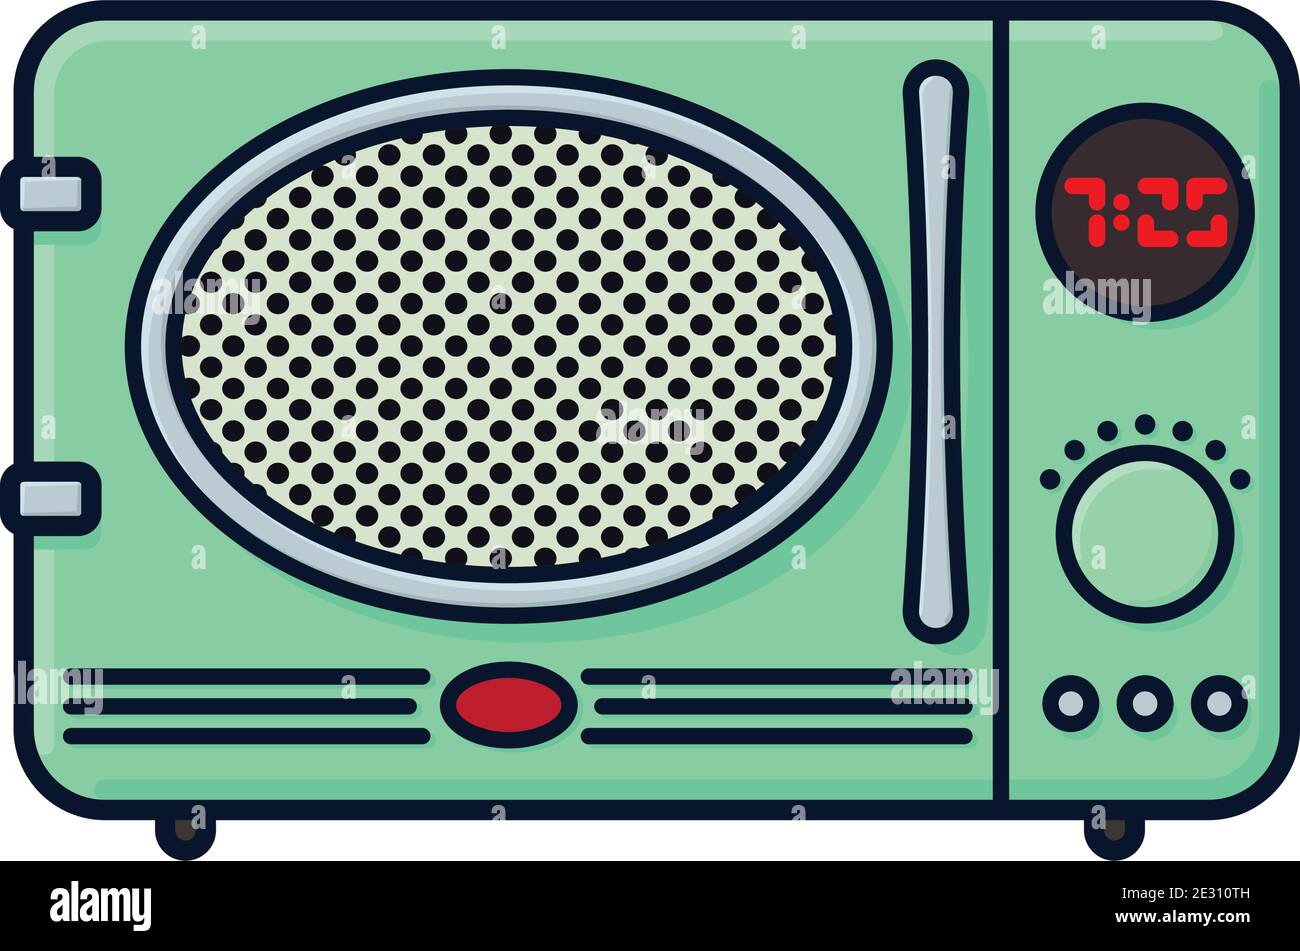 Retro style microwave oven isolated vector illustration for TV Dinner Day on September 10 Stock Vector